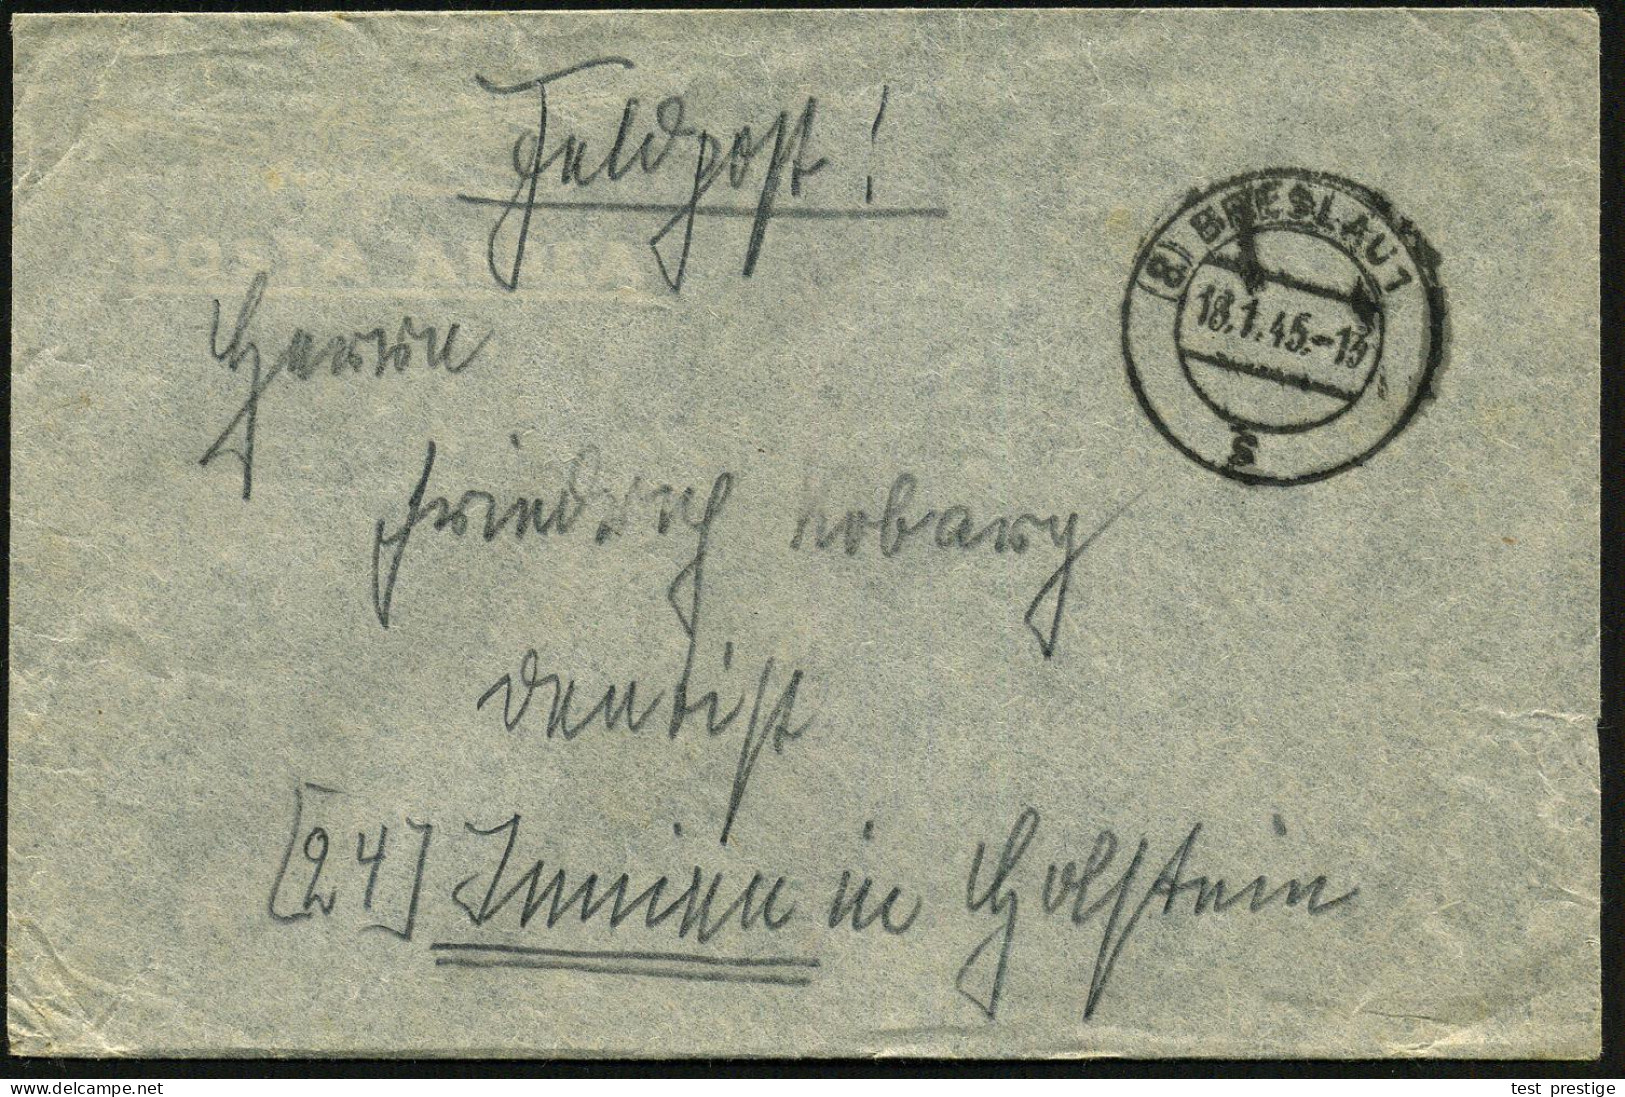 (8) BRESLAU 1/ S 1945 (18.1.) 2K-Steg Mit Postleitzahl ! + Rs. Hs. Fp.-Abs.: "..Leutnant.. Z. Zt. Breslau, Gren.(adier)  - WW2